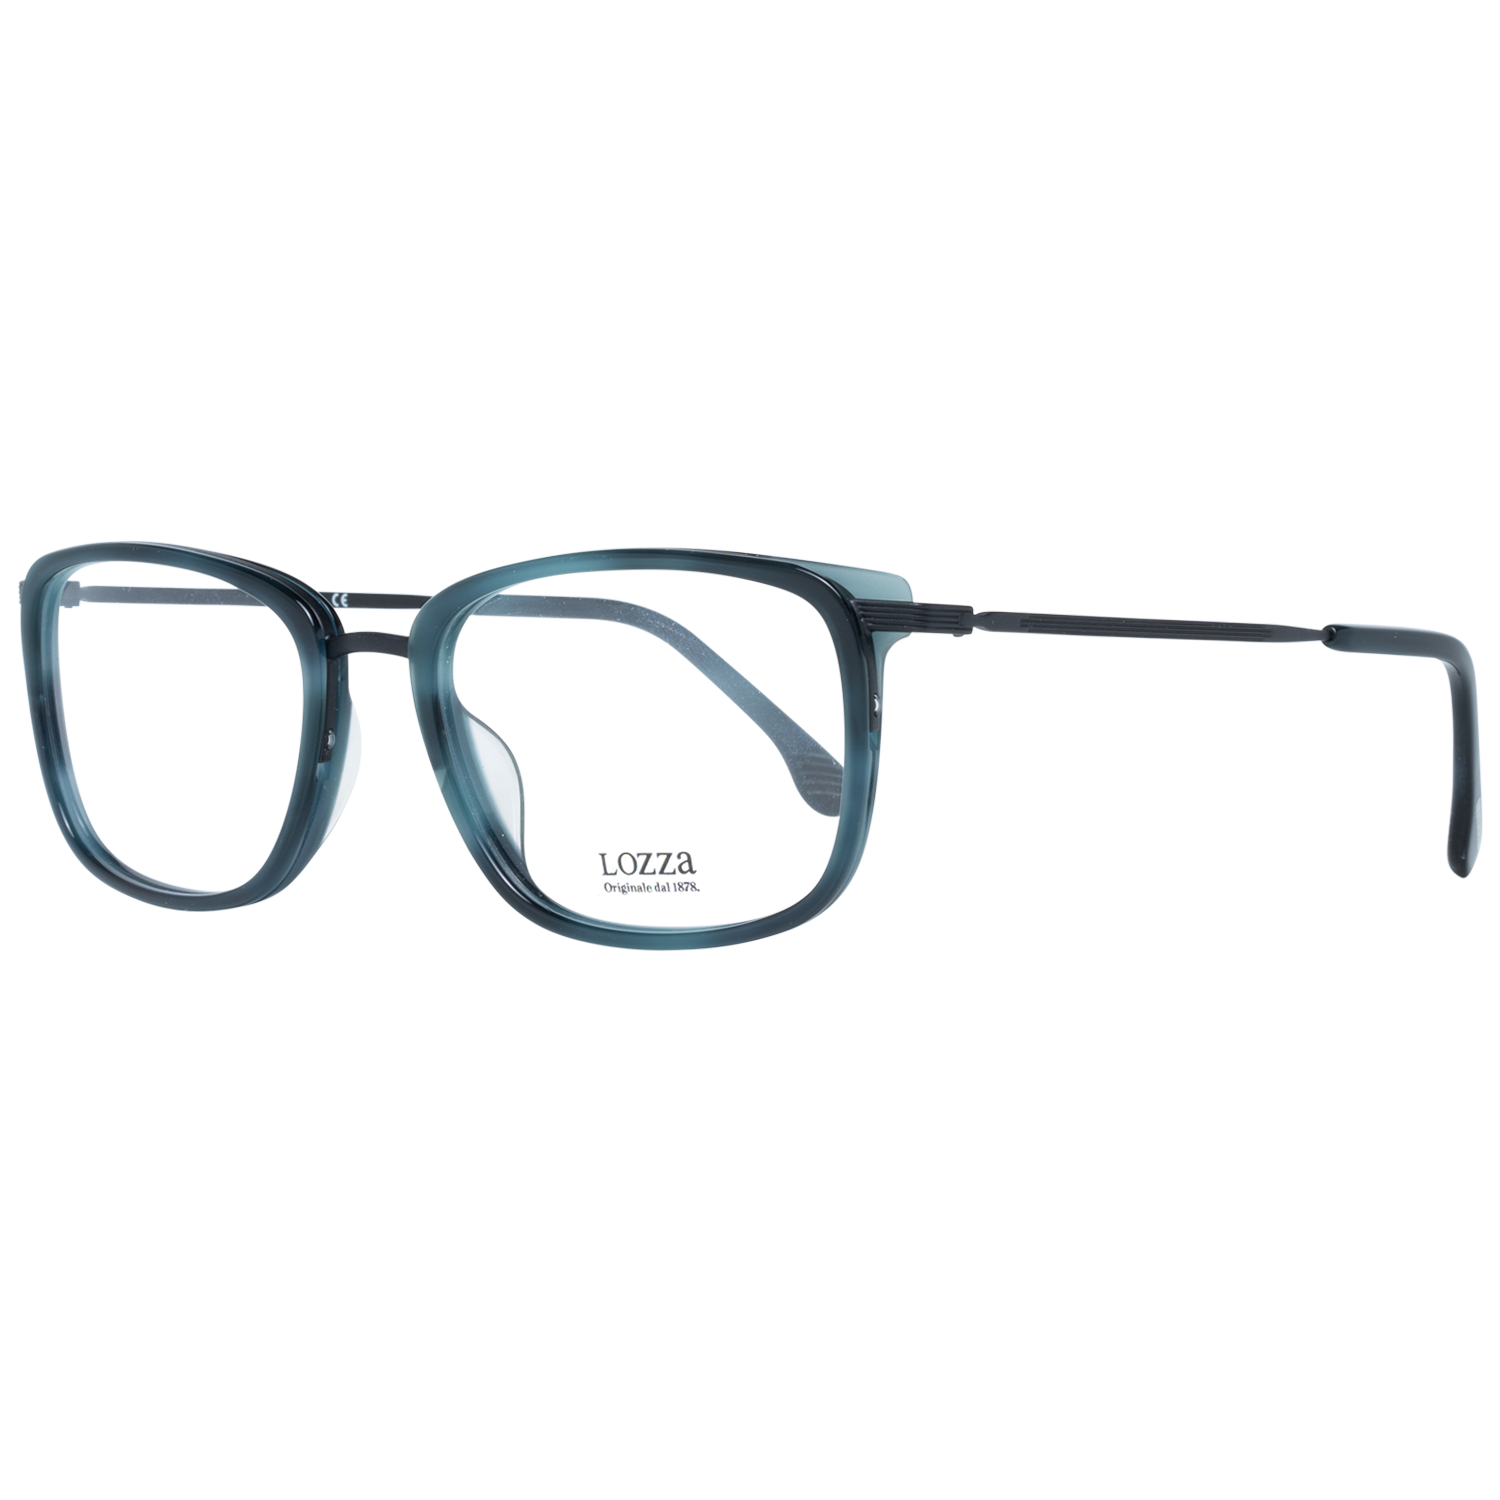 Lozza Frames Lozza Optical Frame VL2307 0531 54 Eyeglasses Eyewear UK USA Australia 